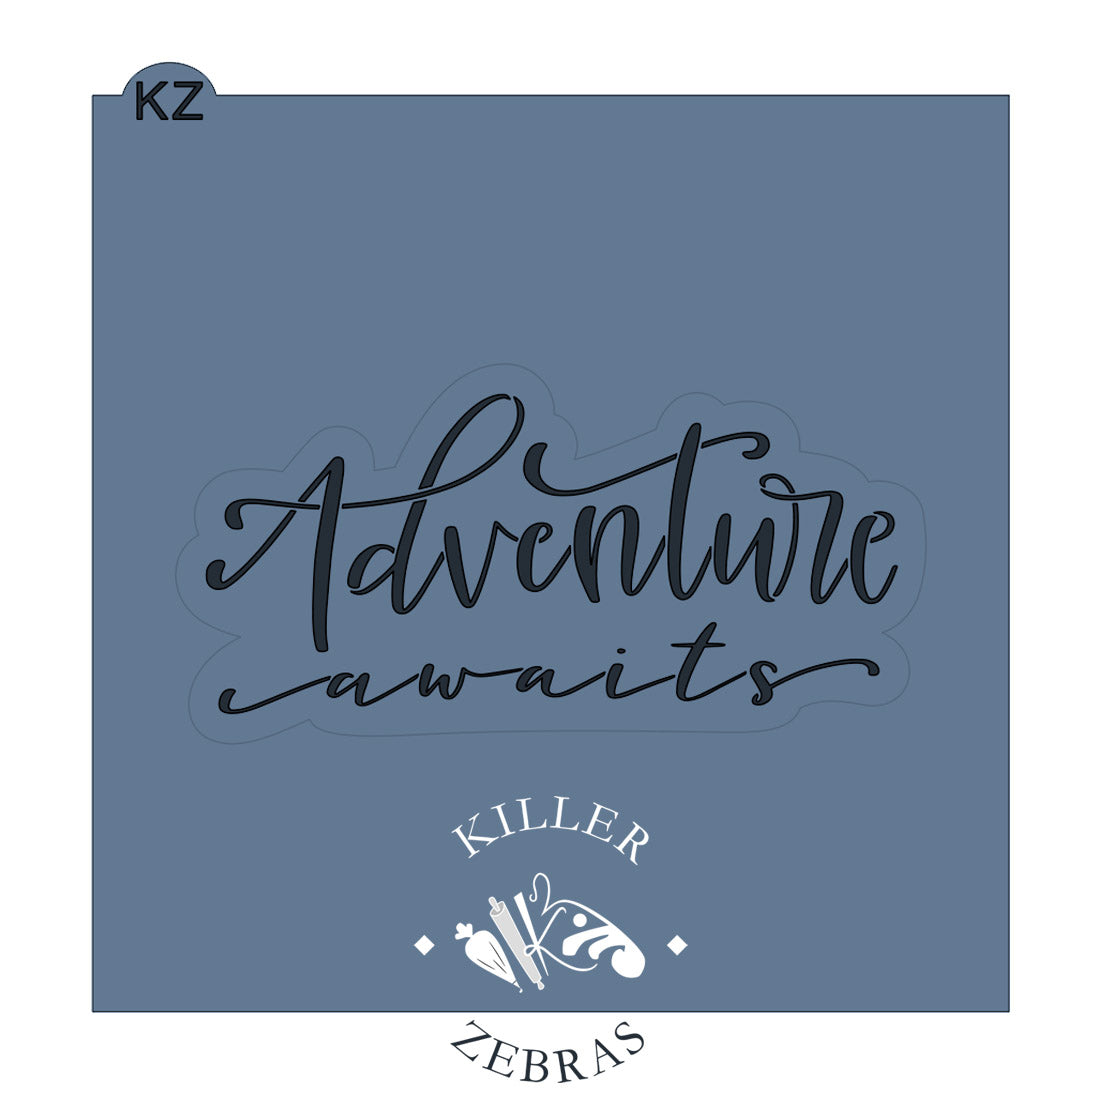 cookie cutter that reads "adventure awaits"